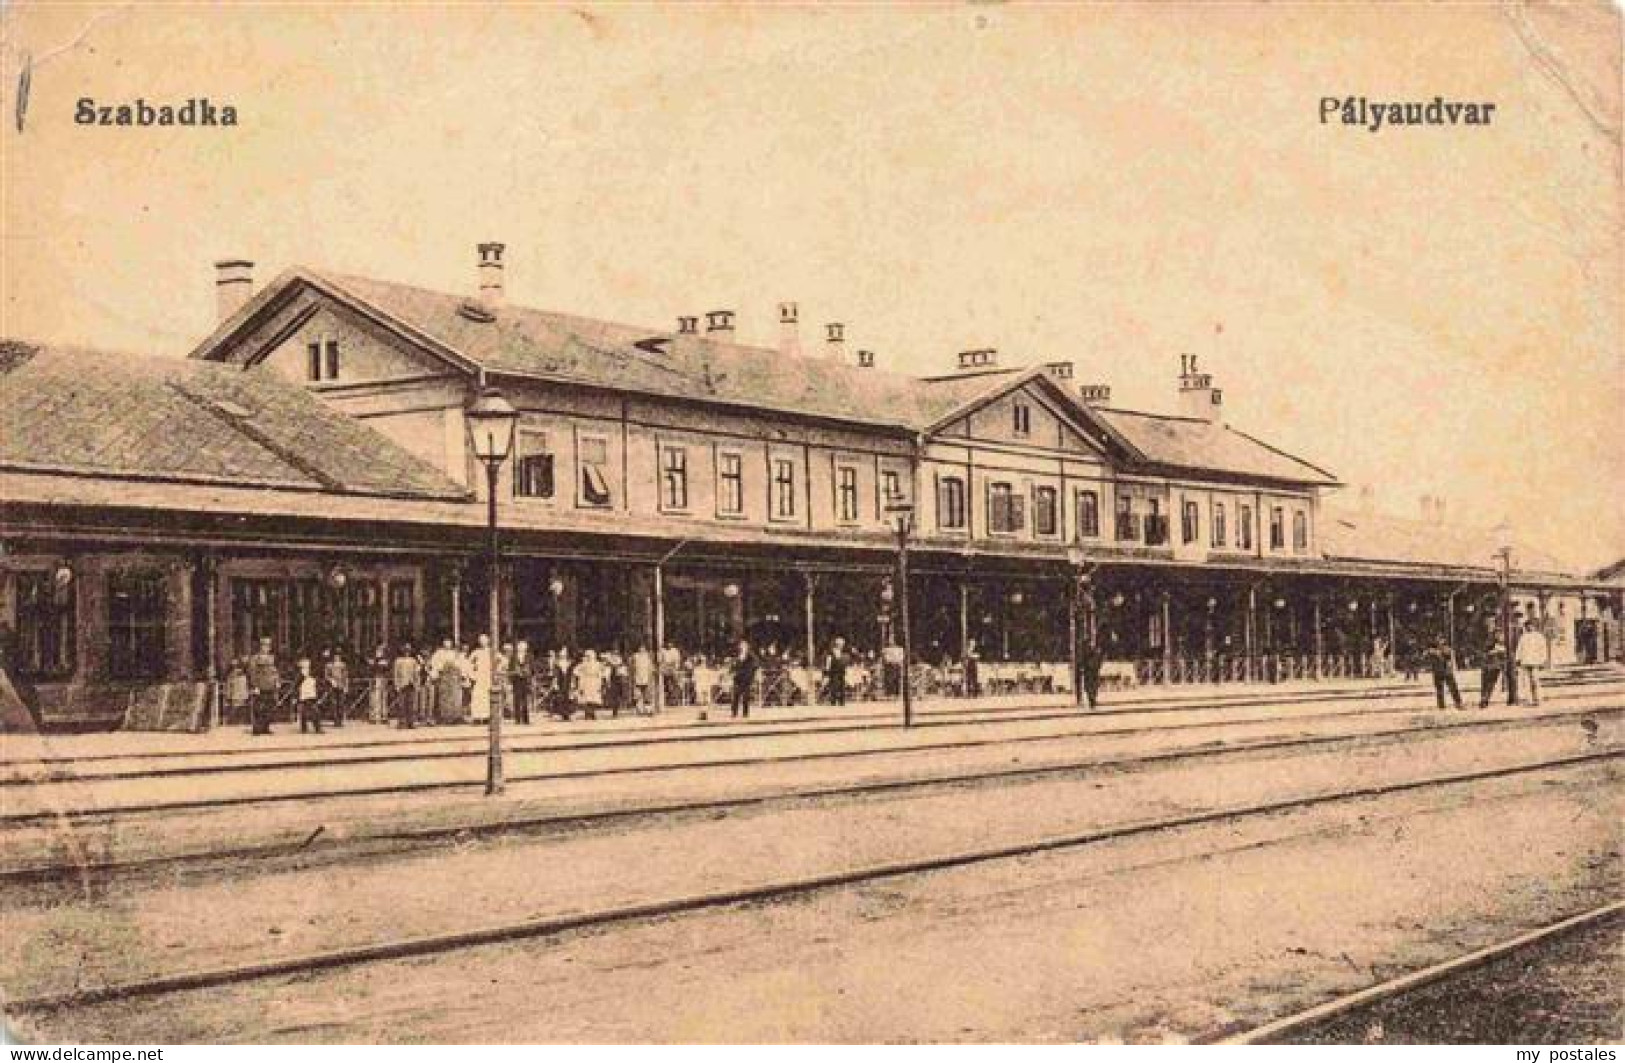 73976632 Szabadka_SUBOTICA_Serbija Palyaudvar Bahnhof - Serbia